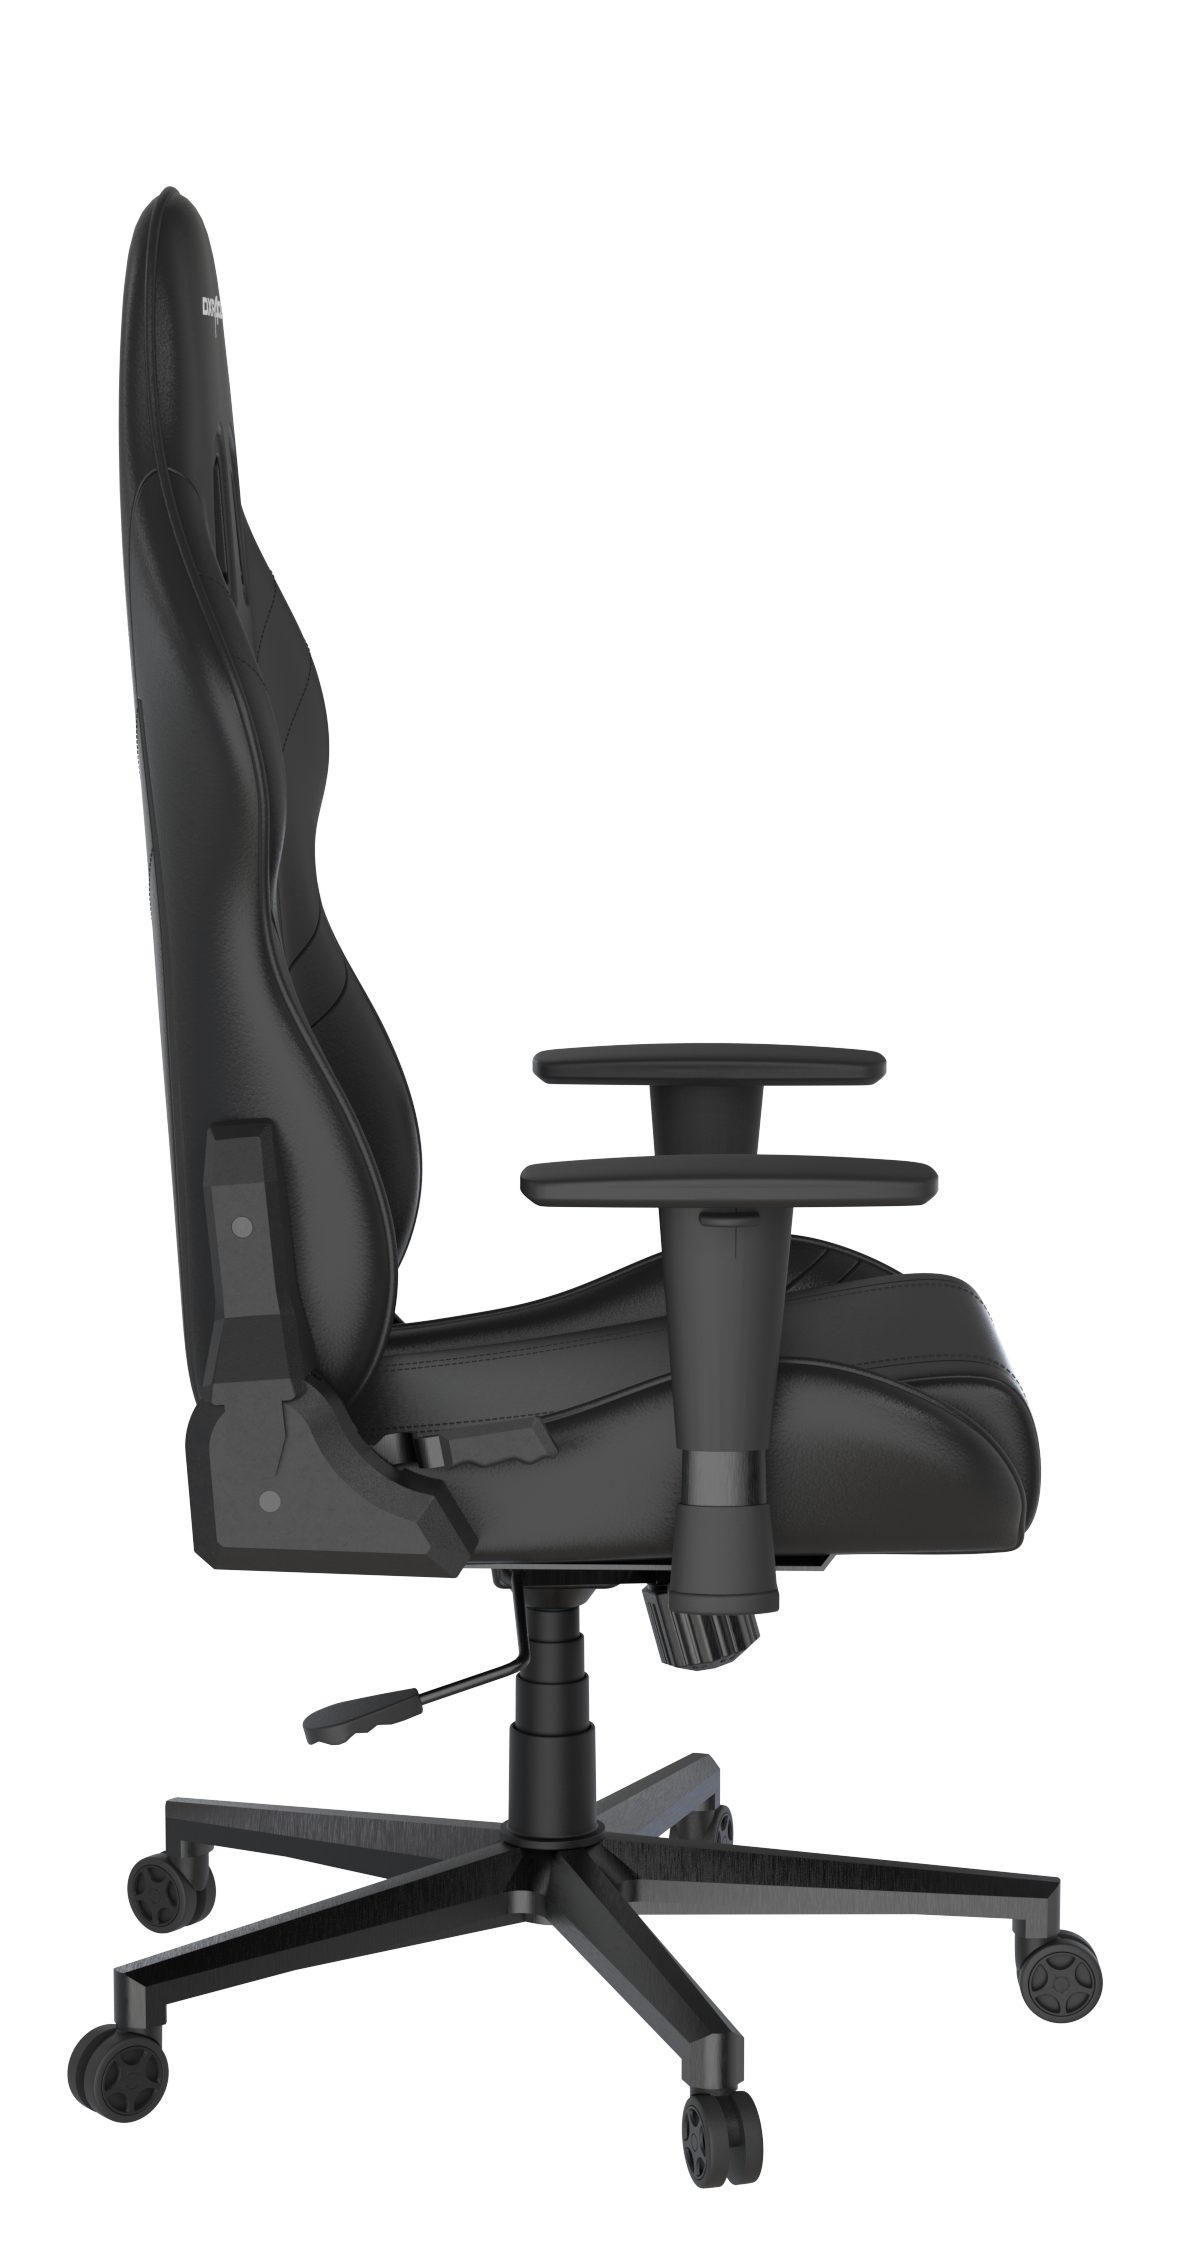 Gaming-Stuhl DXRacer OH-PM88 schwarz